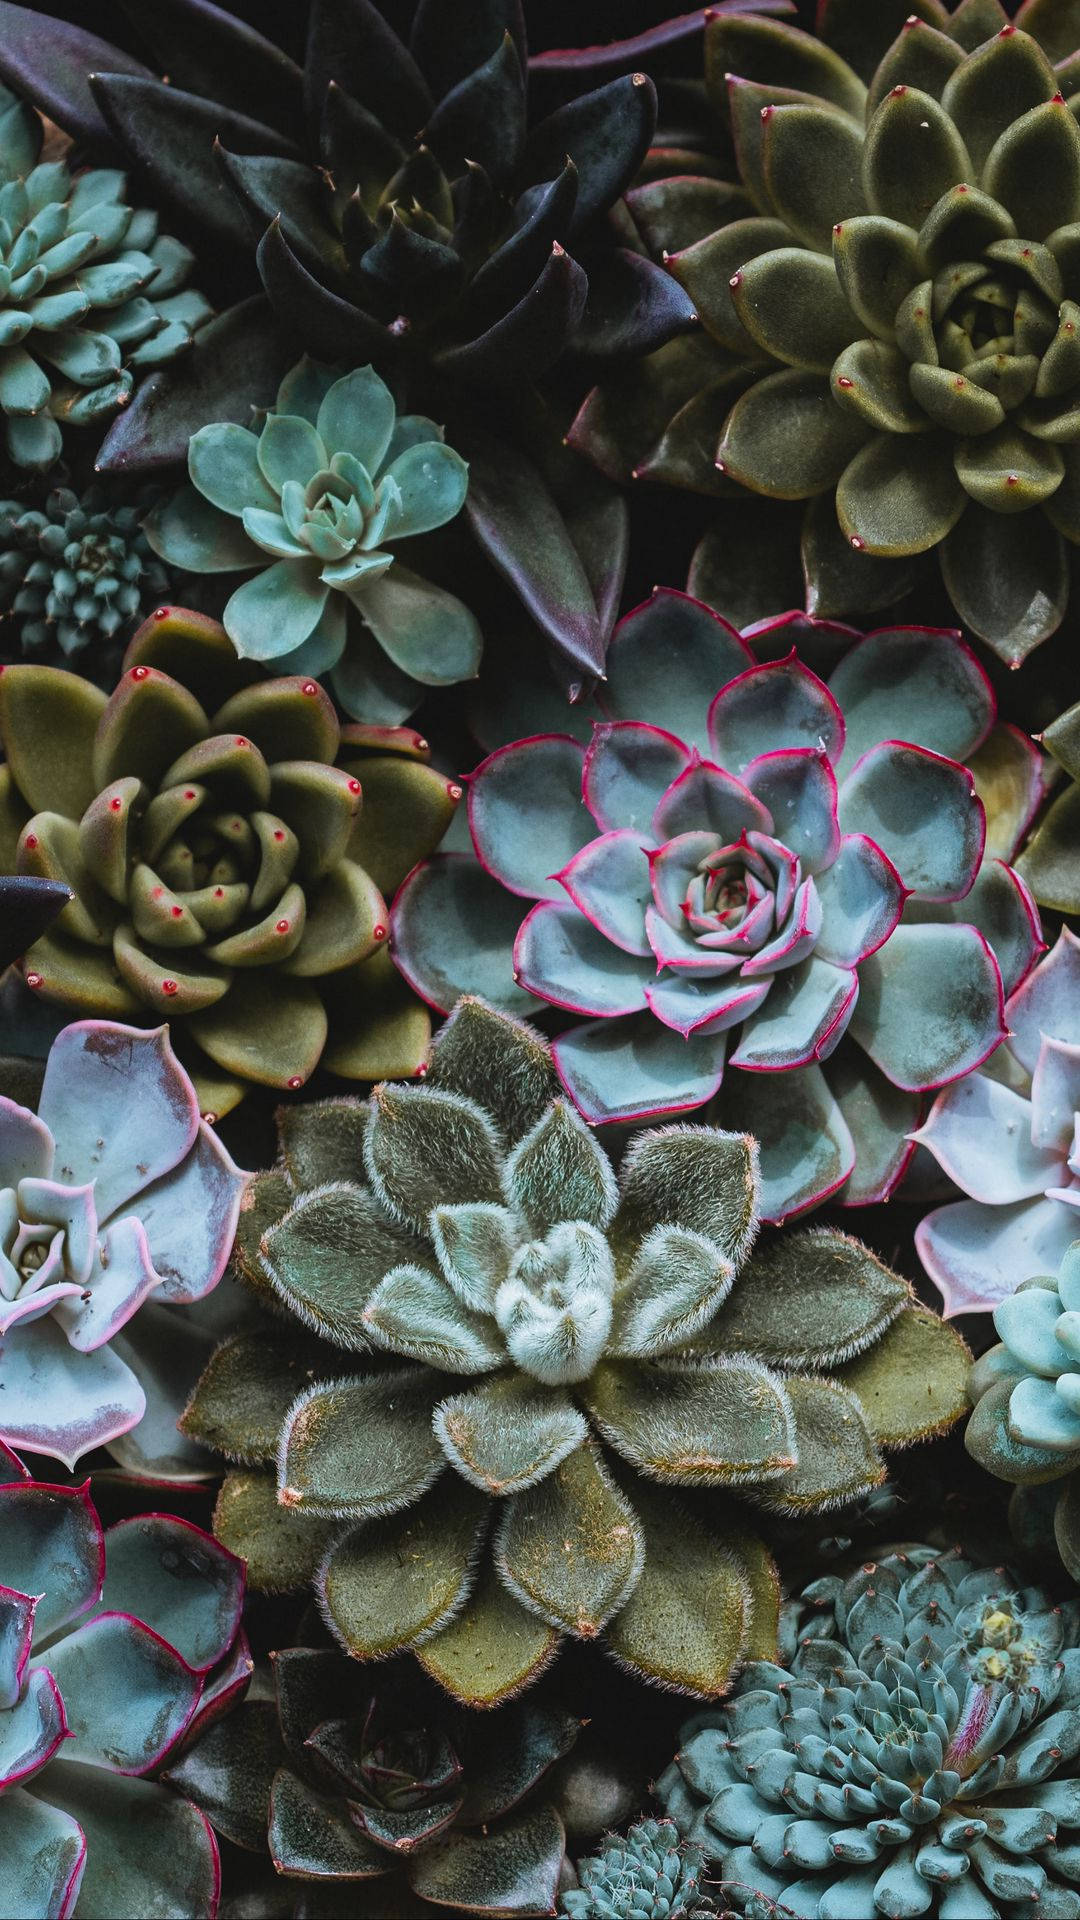 "A Diverse Collection of Rare Succulent Plants" Wallpaper